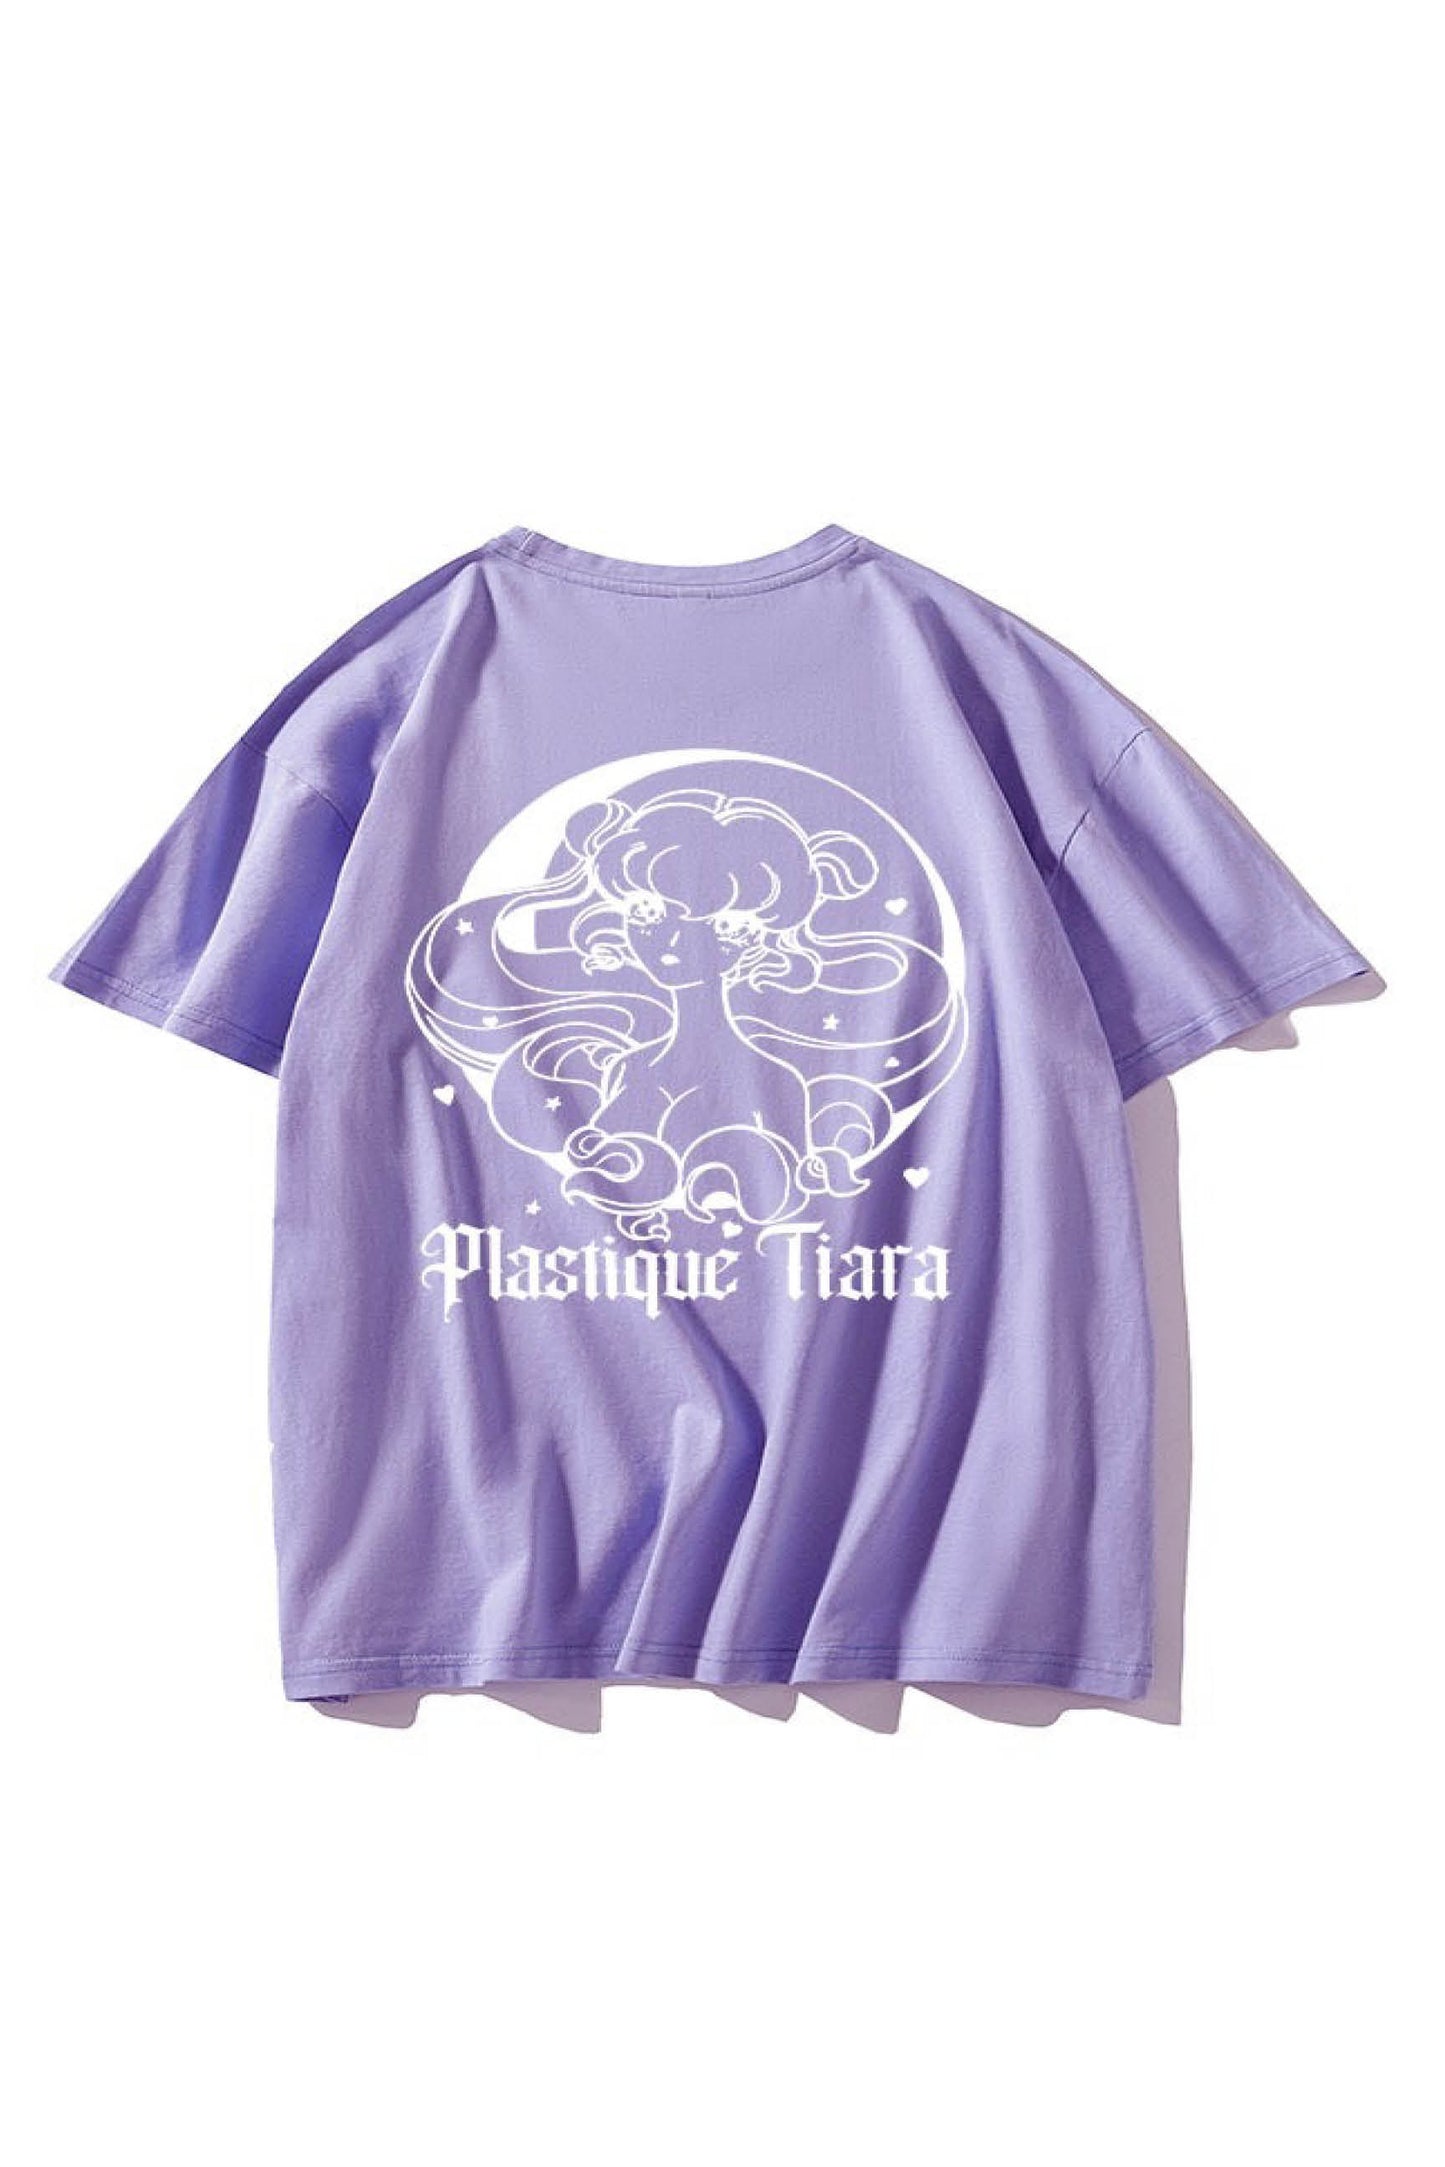 Plastique Tiara Lilac Name Shirt